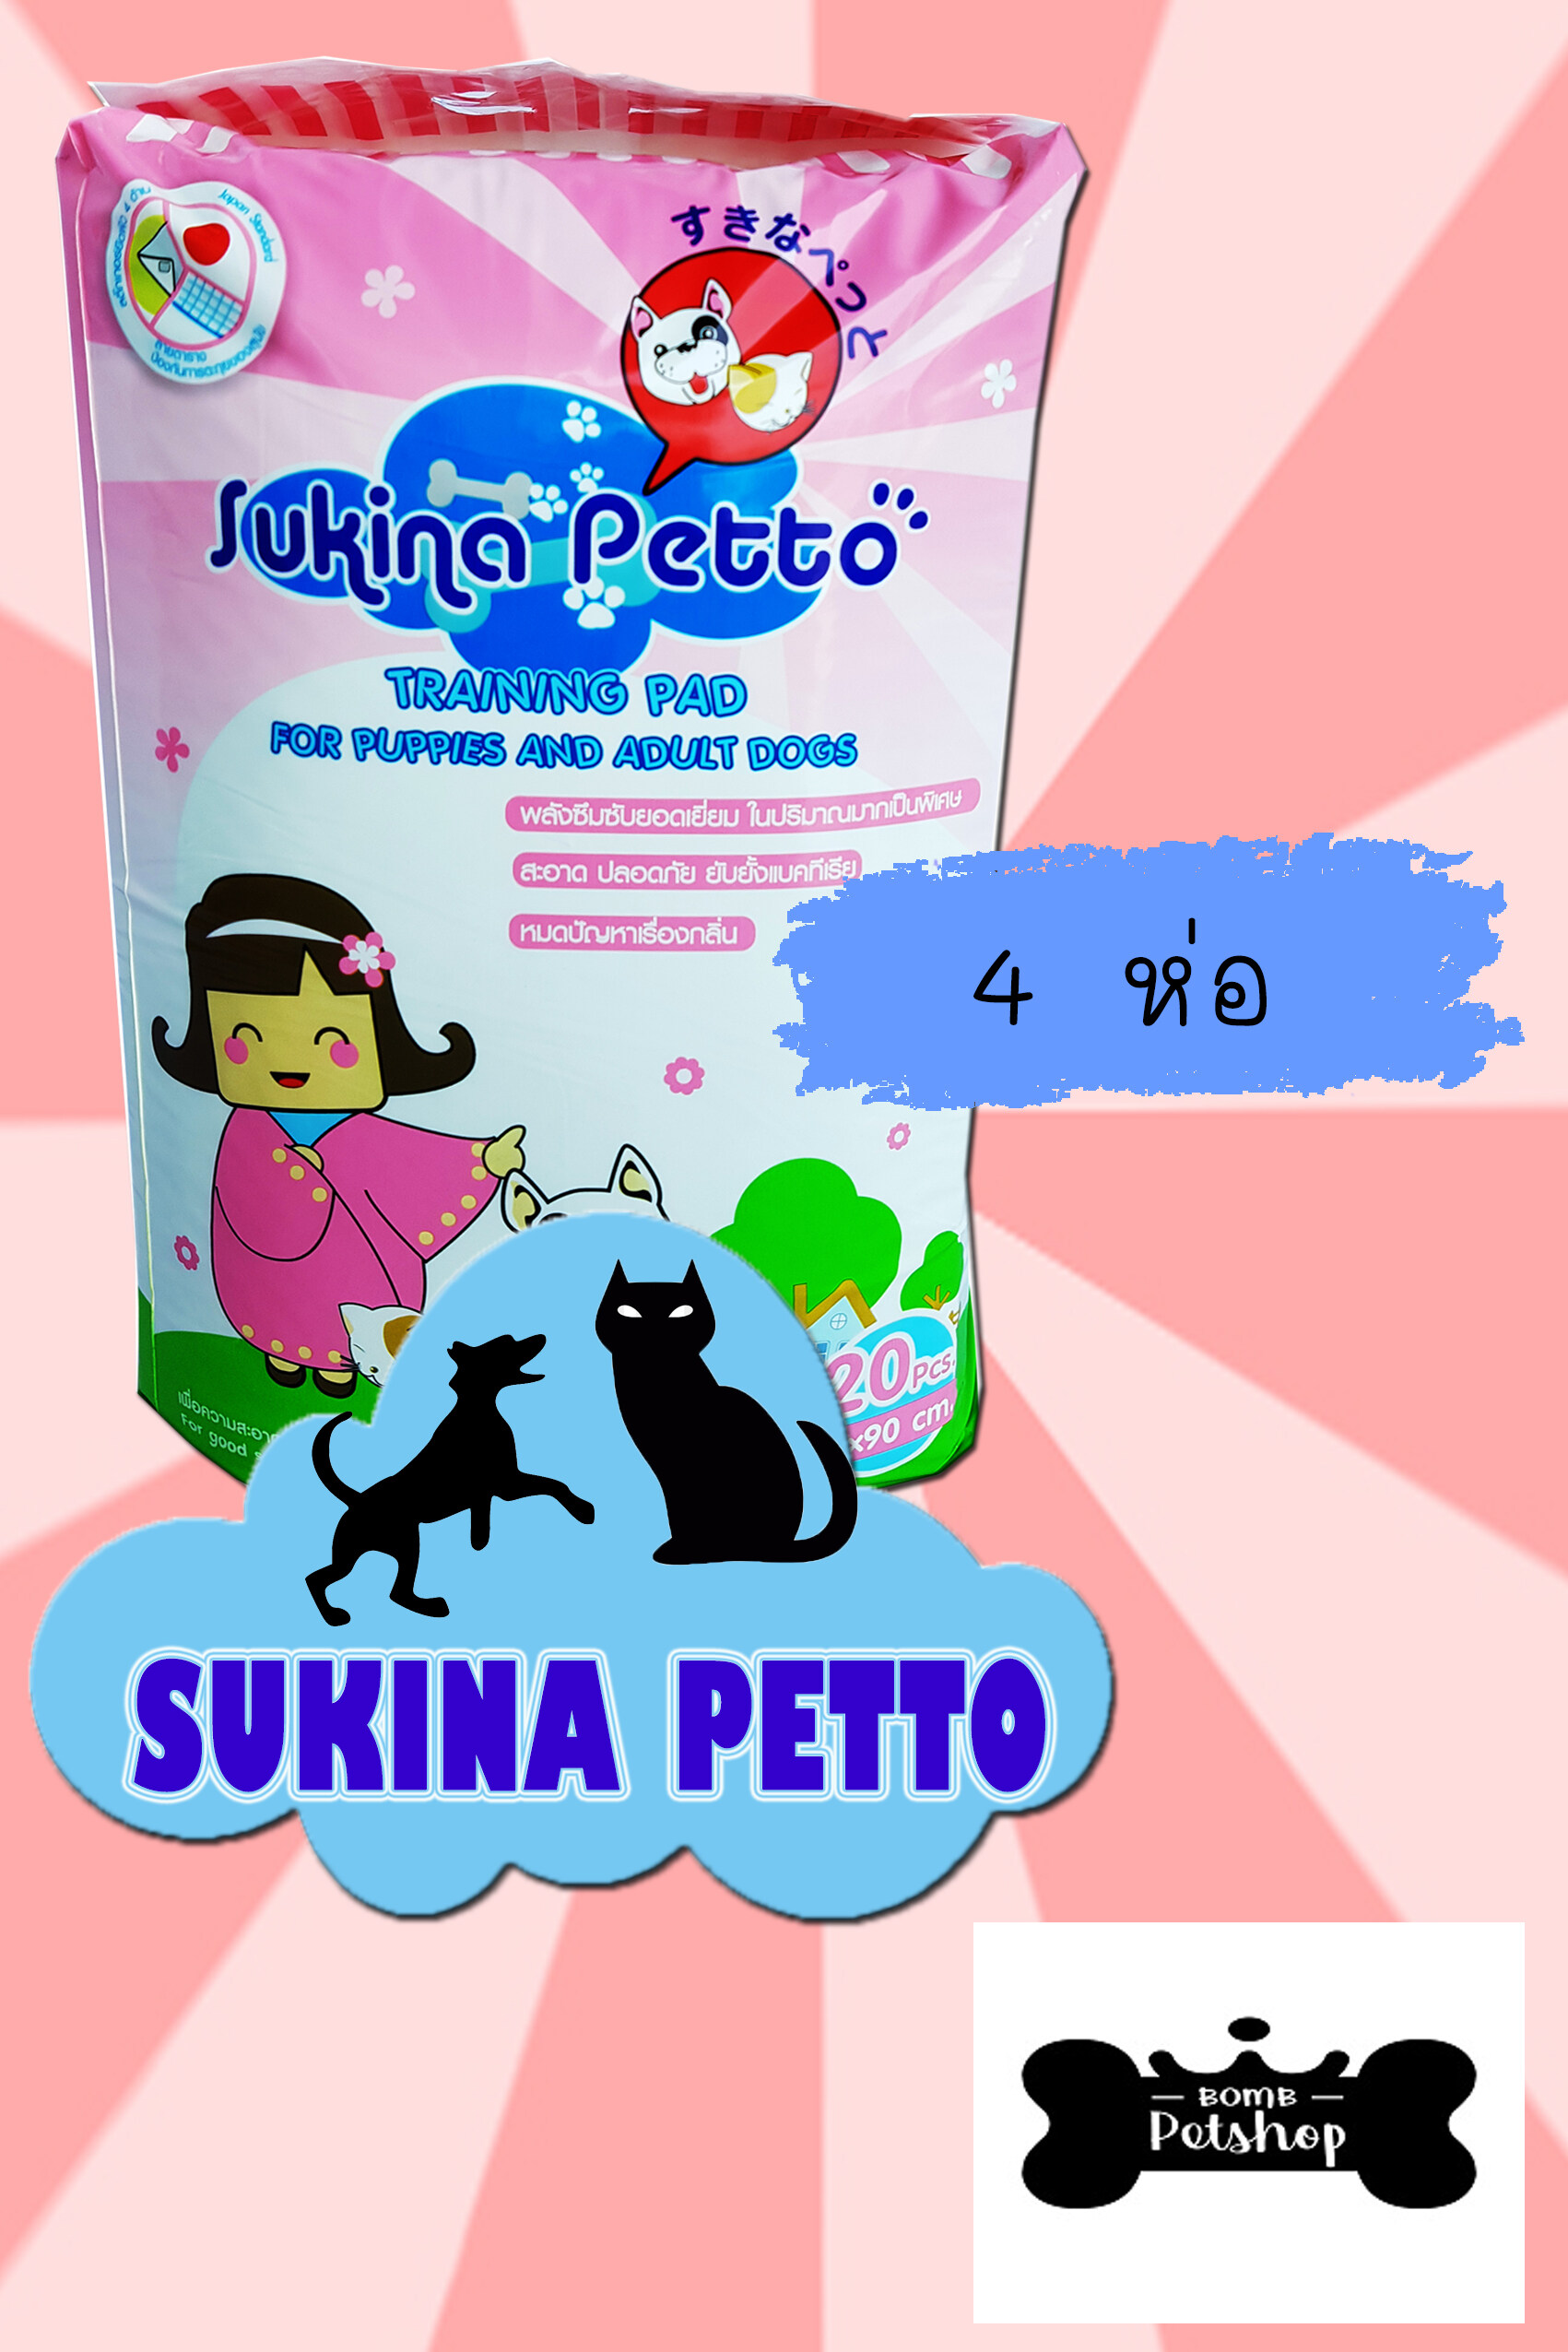 Sukina Petto Pet Pad Toilet Sheet ซุกินะ แผ่นรองซับ แผ่นซับฉี่ แผ่นรองฉี่ สุนัข แมว กระต่าย สัตว์เลี้ยง ขนาด 60*90ซม. จำนวน 20 ชิ้น จำนวน 4 ห่อ